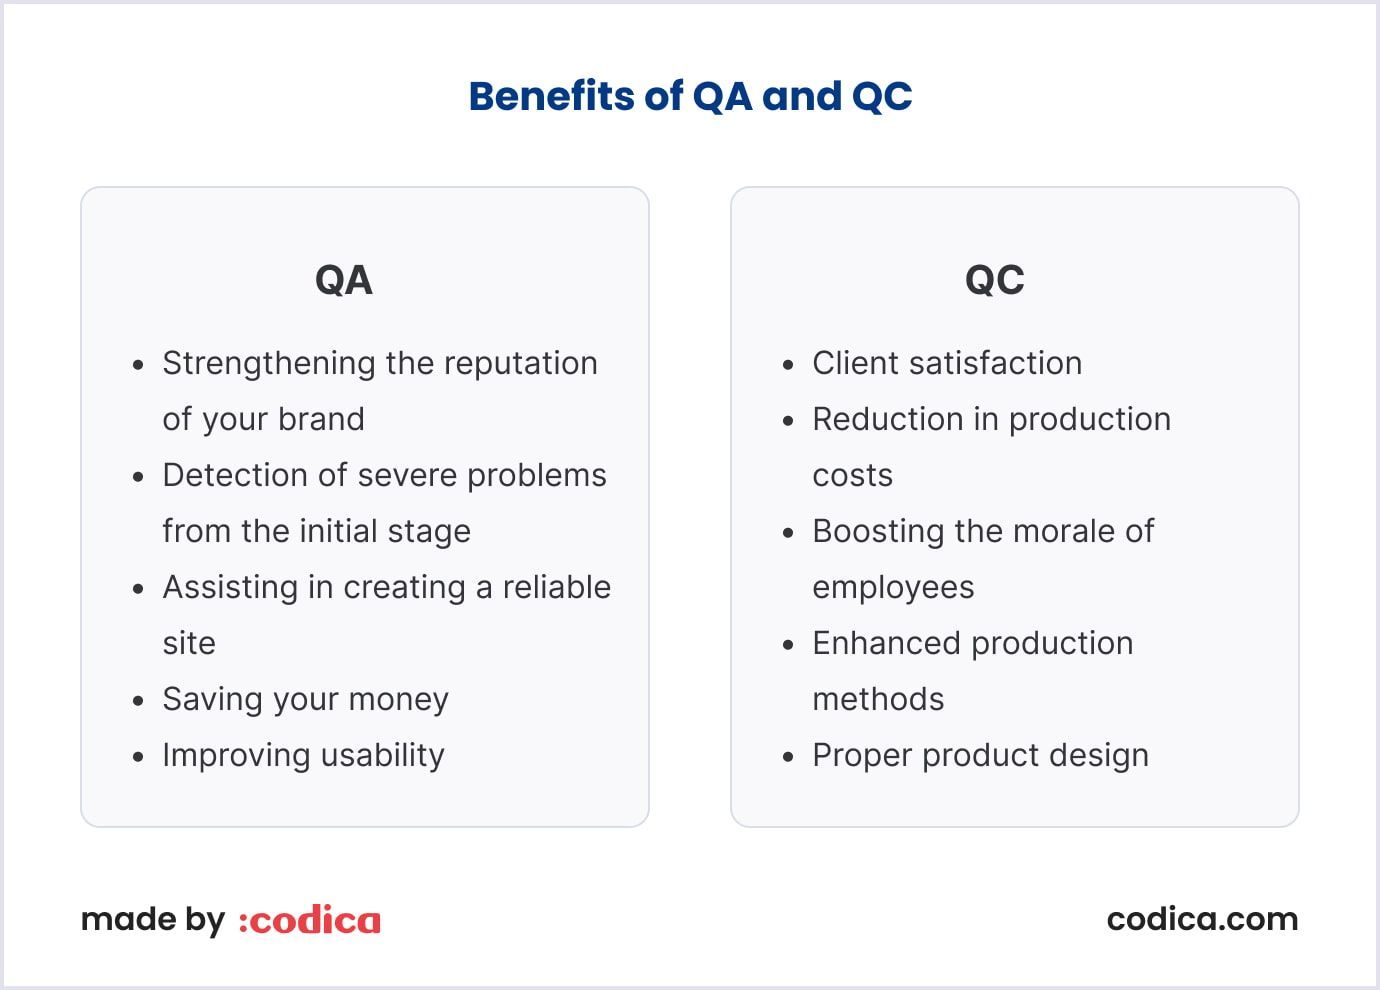 Main advantages of QA and QC